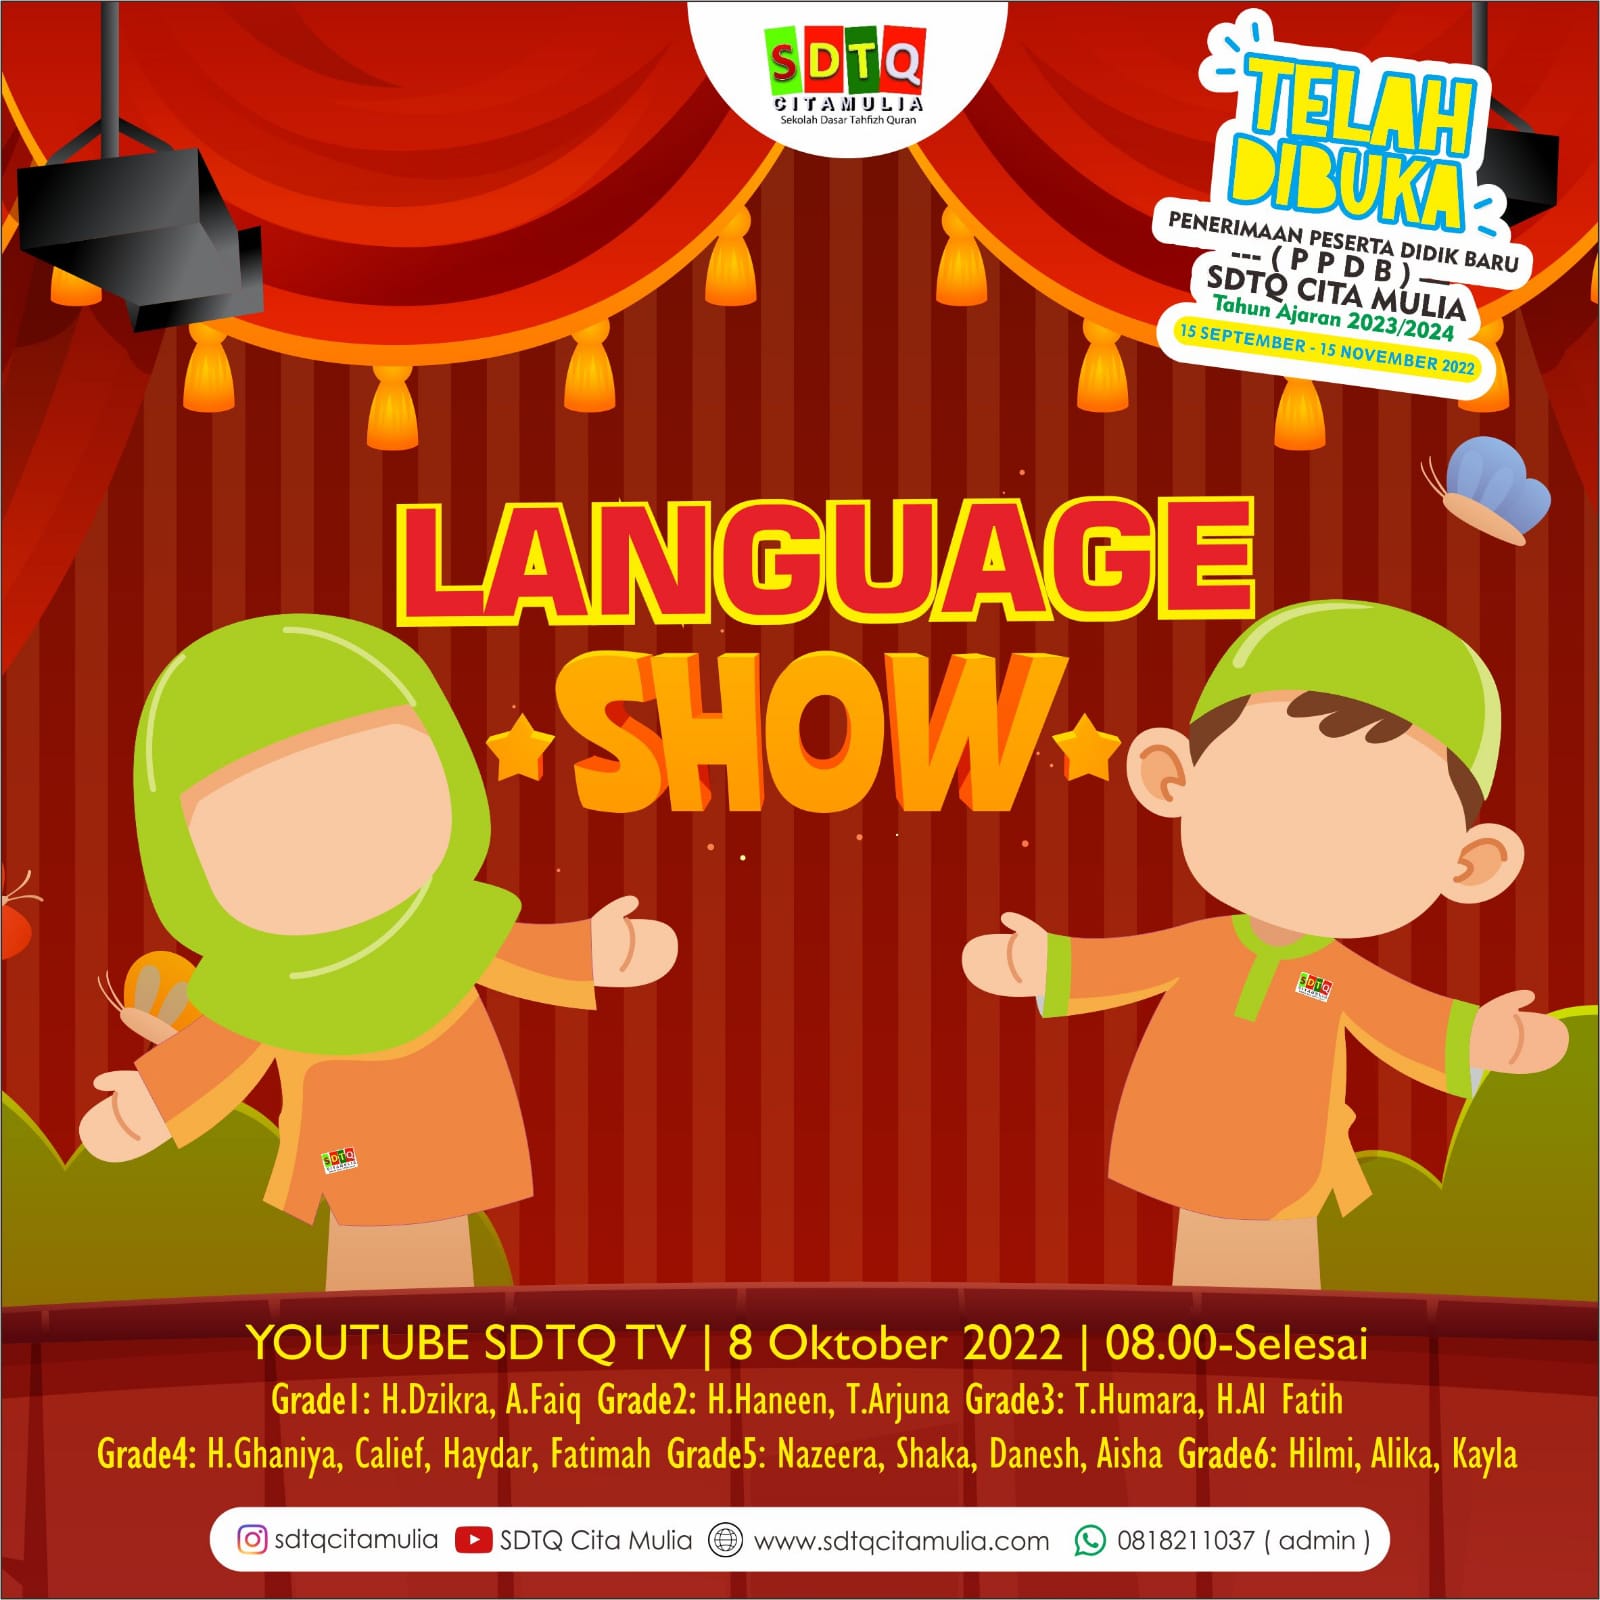 Language Show SDTQ Cita Mulia